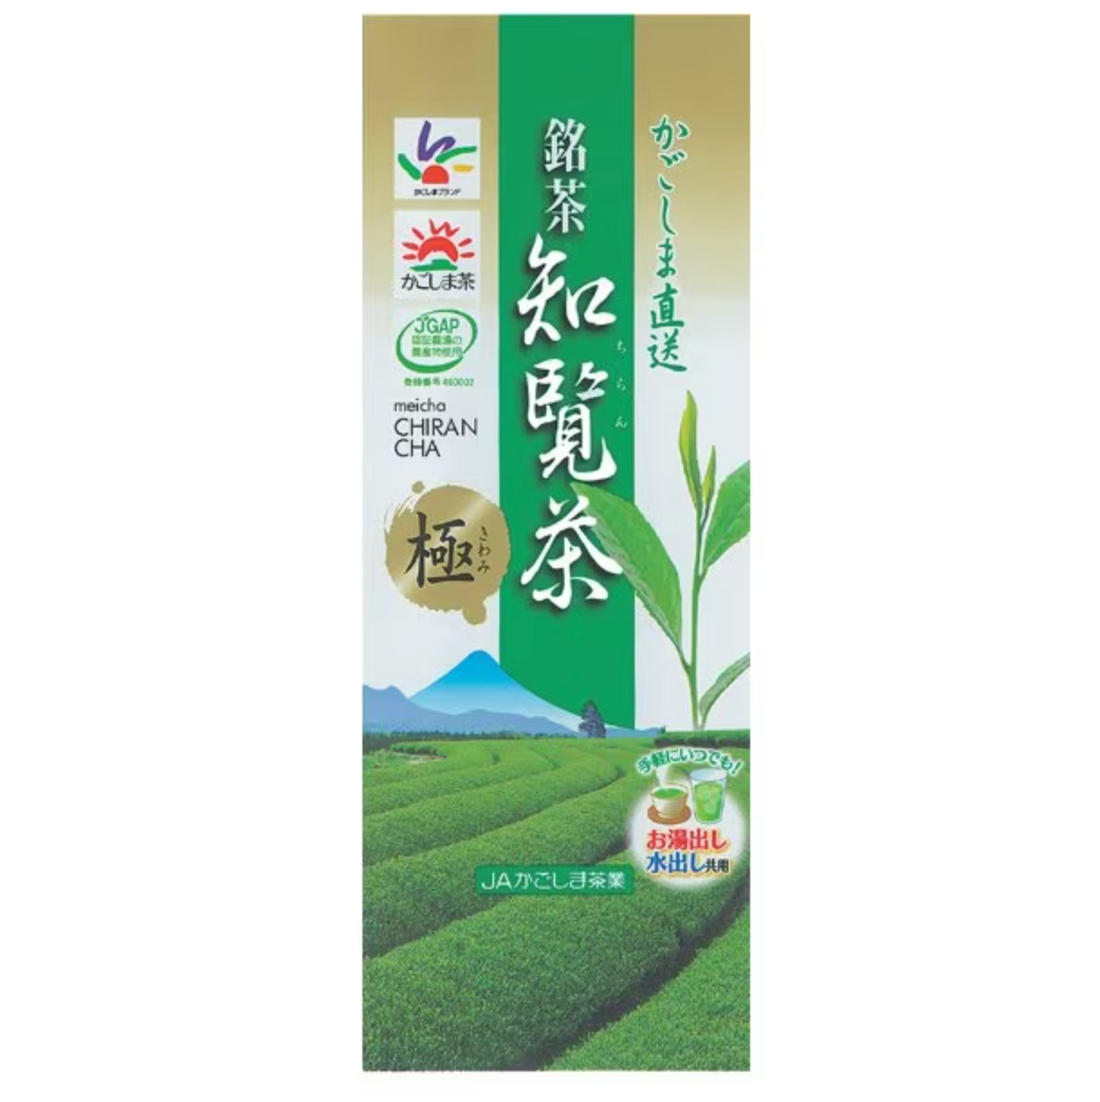 JA Kagoshima Tea Industry Chiran Tea Kiwami 100g